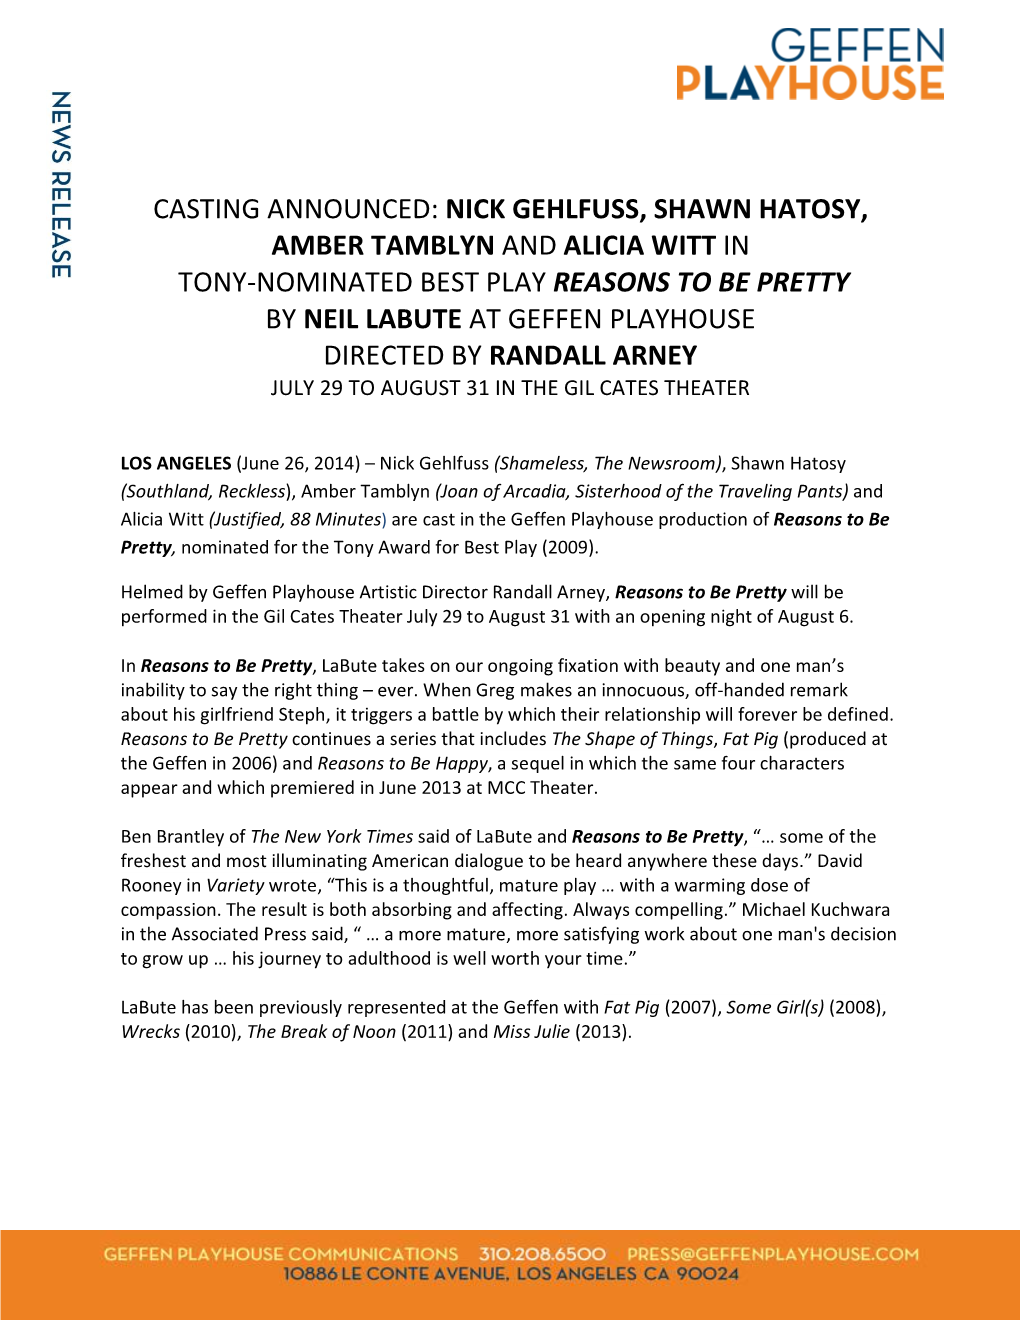 Casting Announced: Nick Gehlfuss, Shawn Hatosy